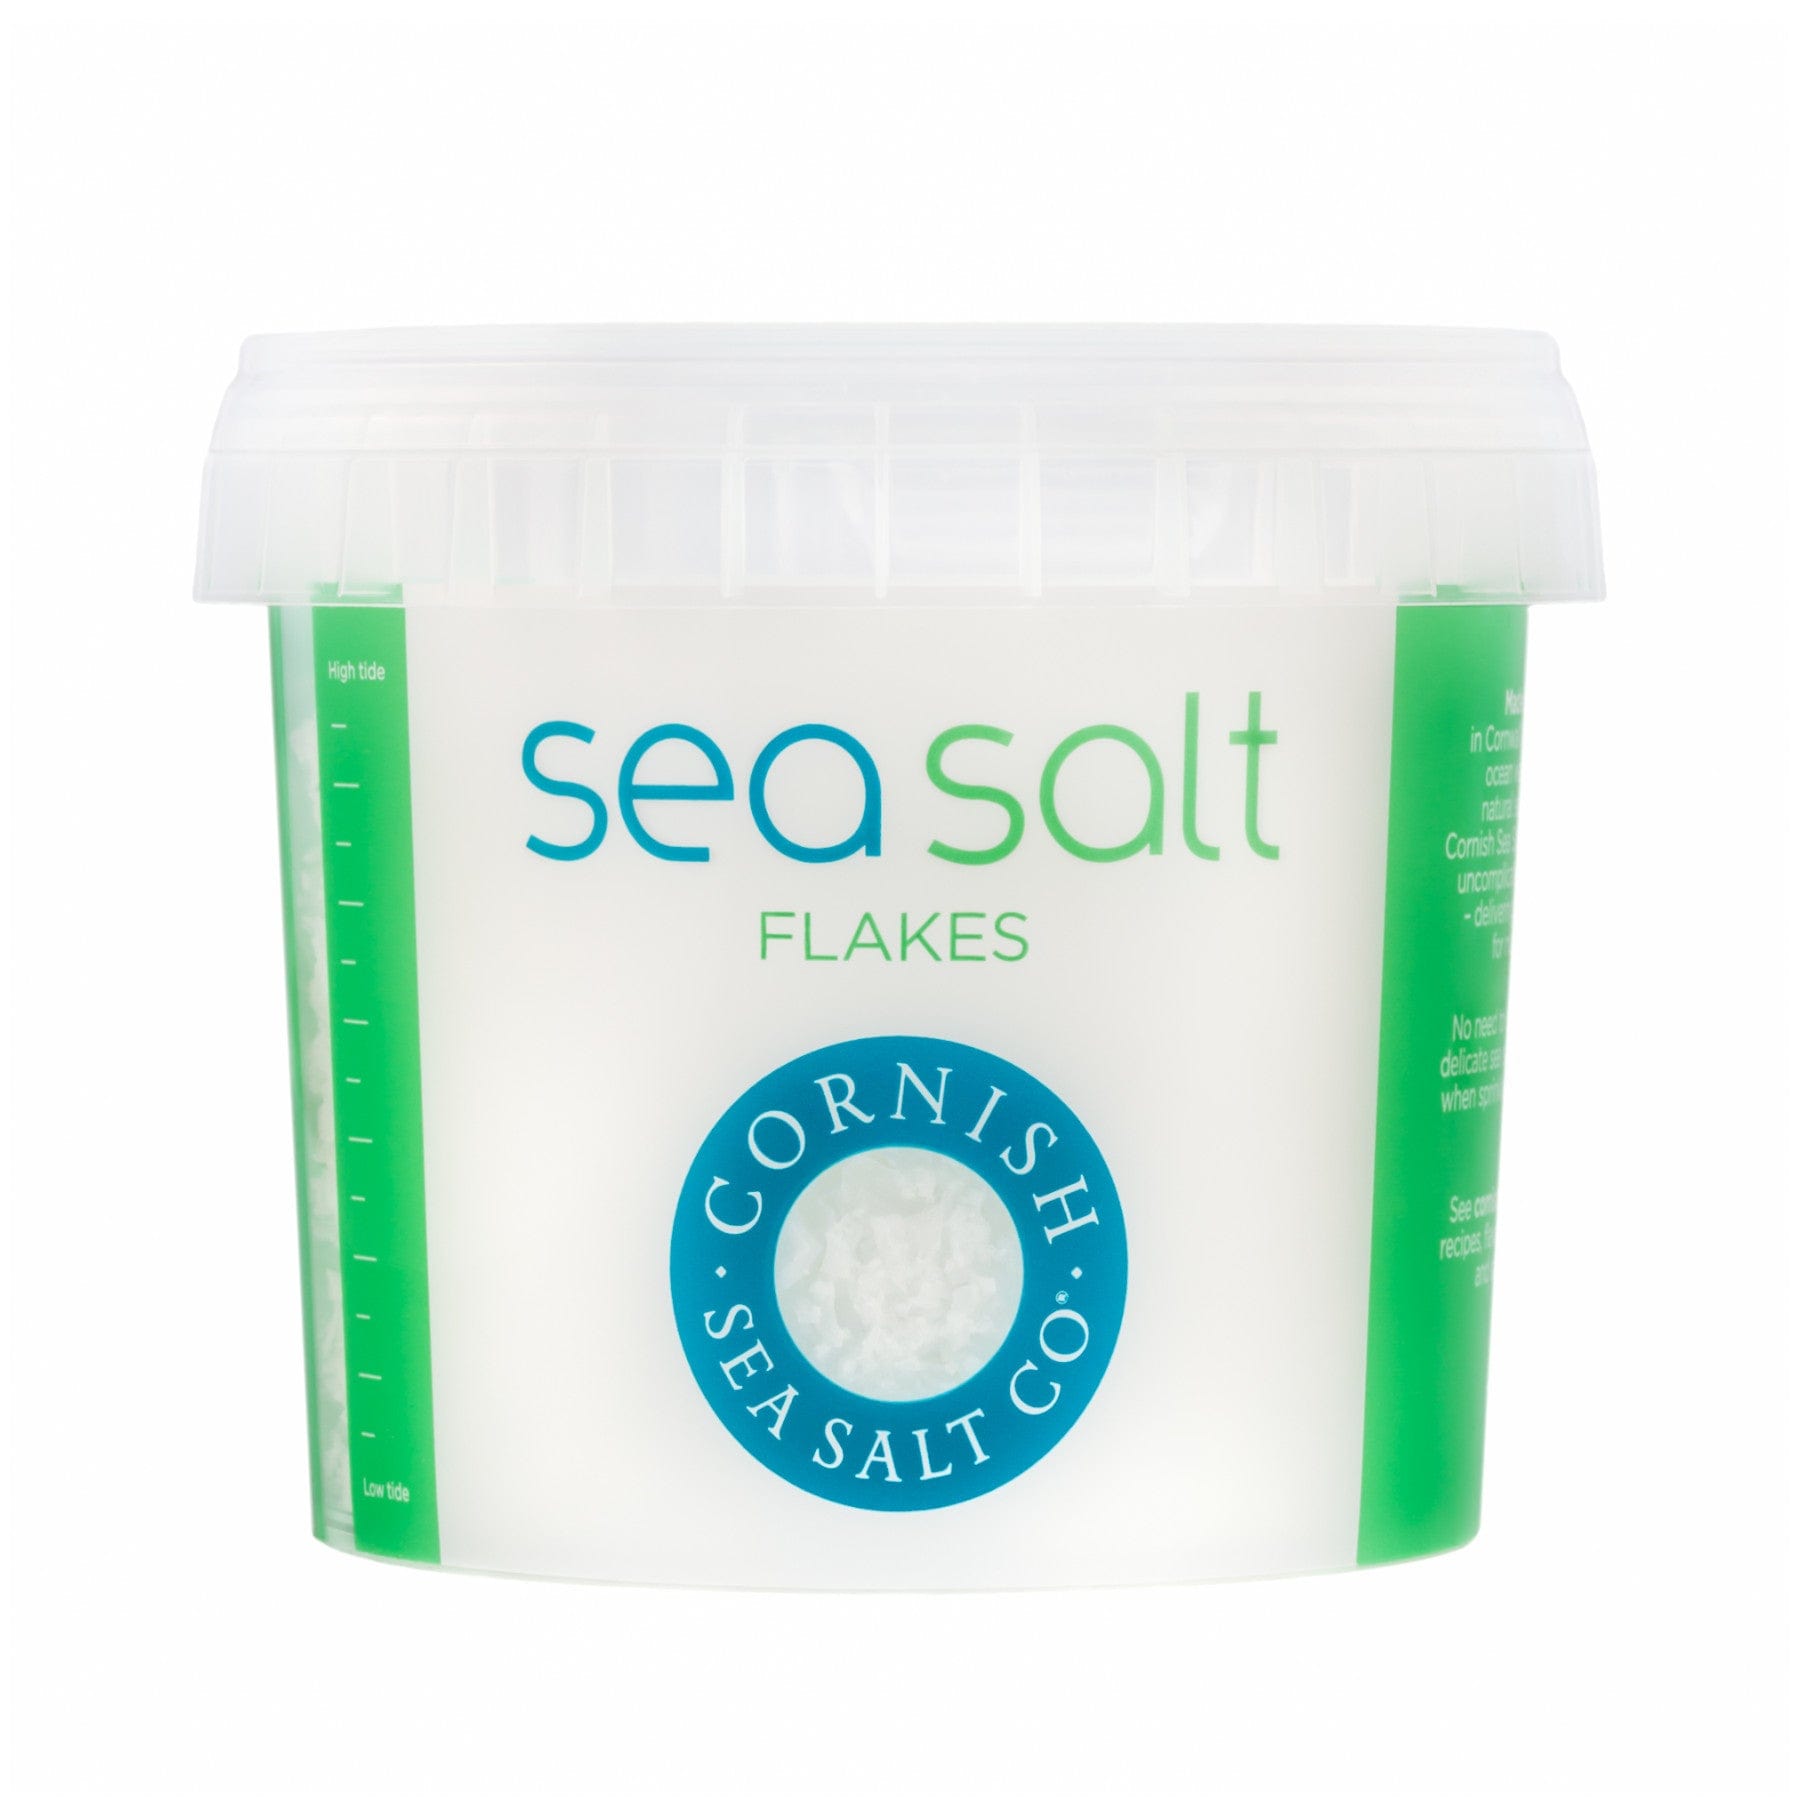 Cornish sea salt flakes 150g